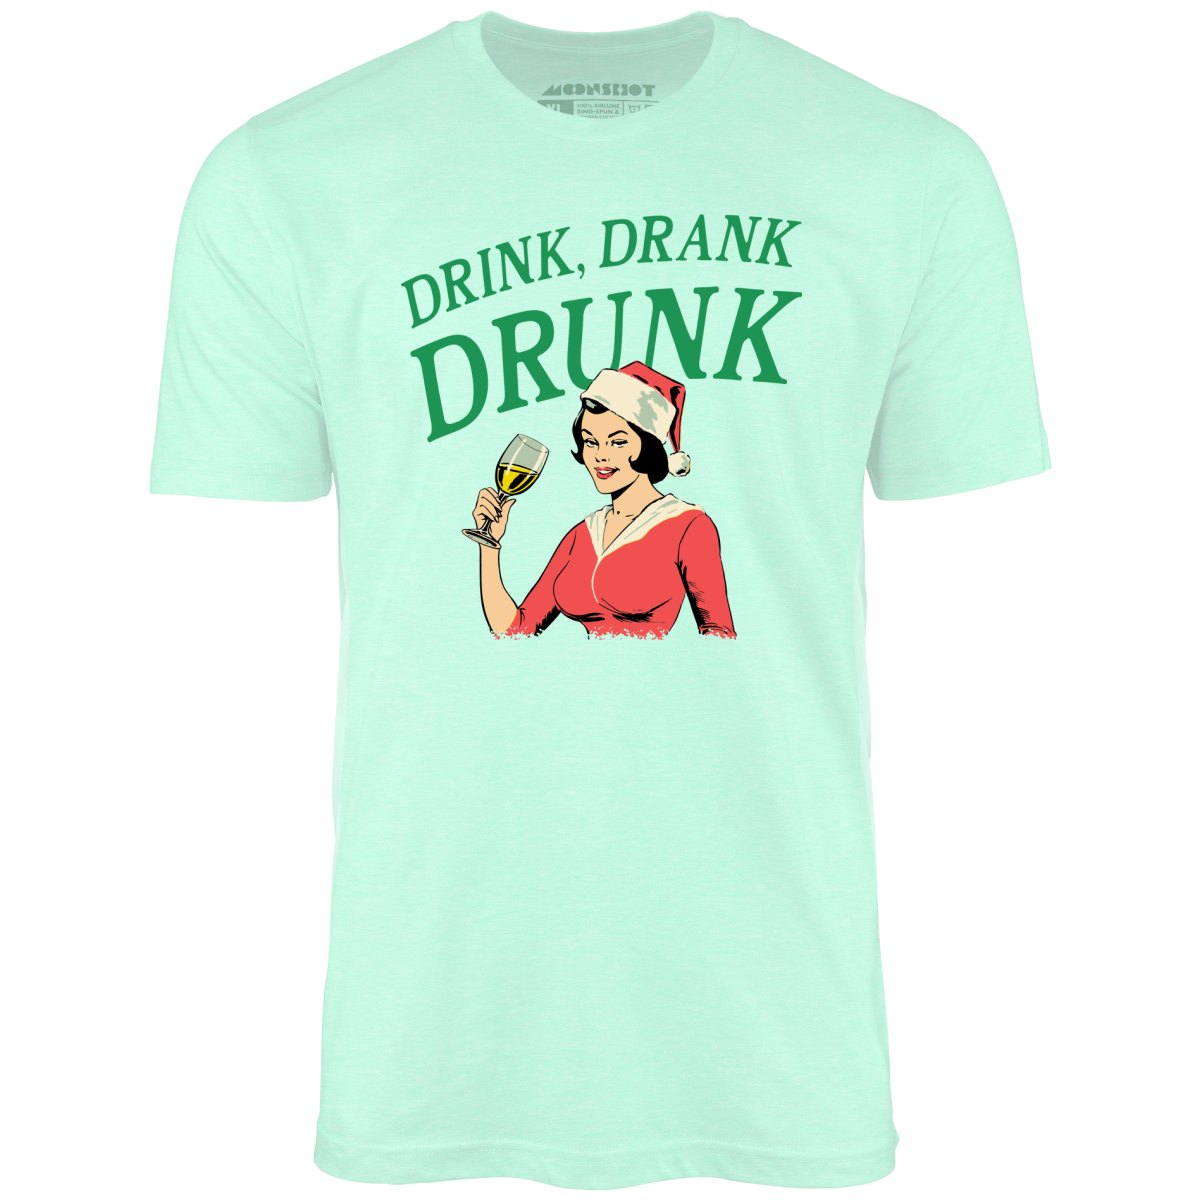 Drink, Drank, Drunk - Unisex T-Shirt